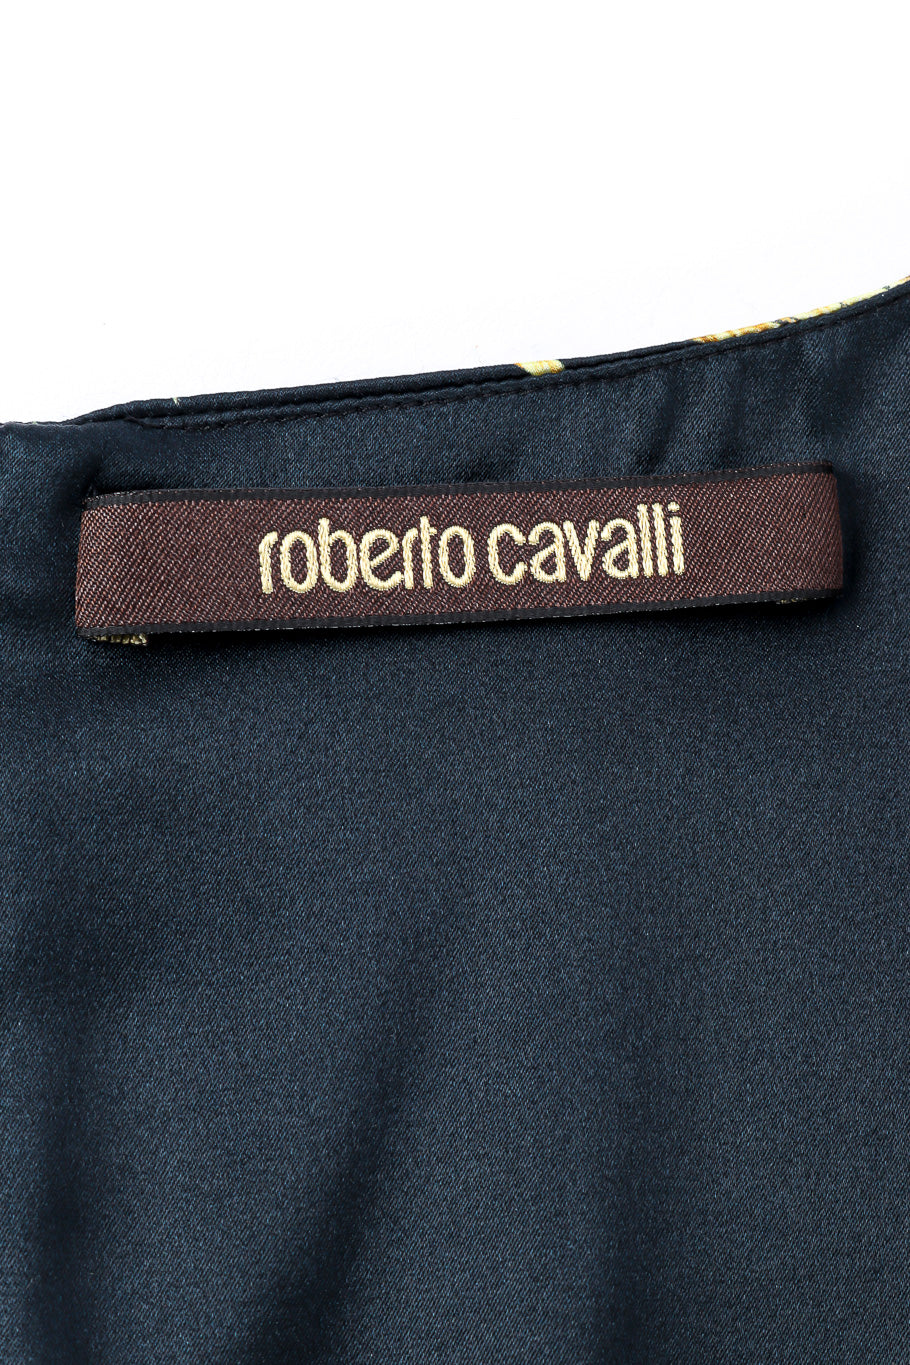 Roberto Cavalli Filigree Wings Graphic Silk Dress label closeup @Recessla